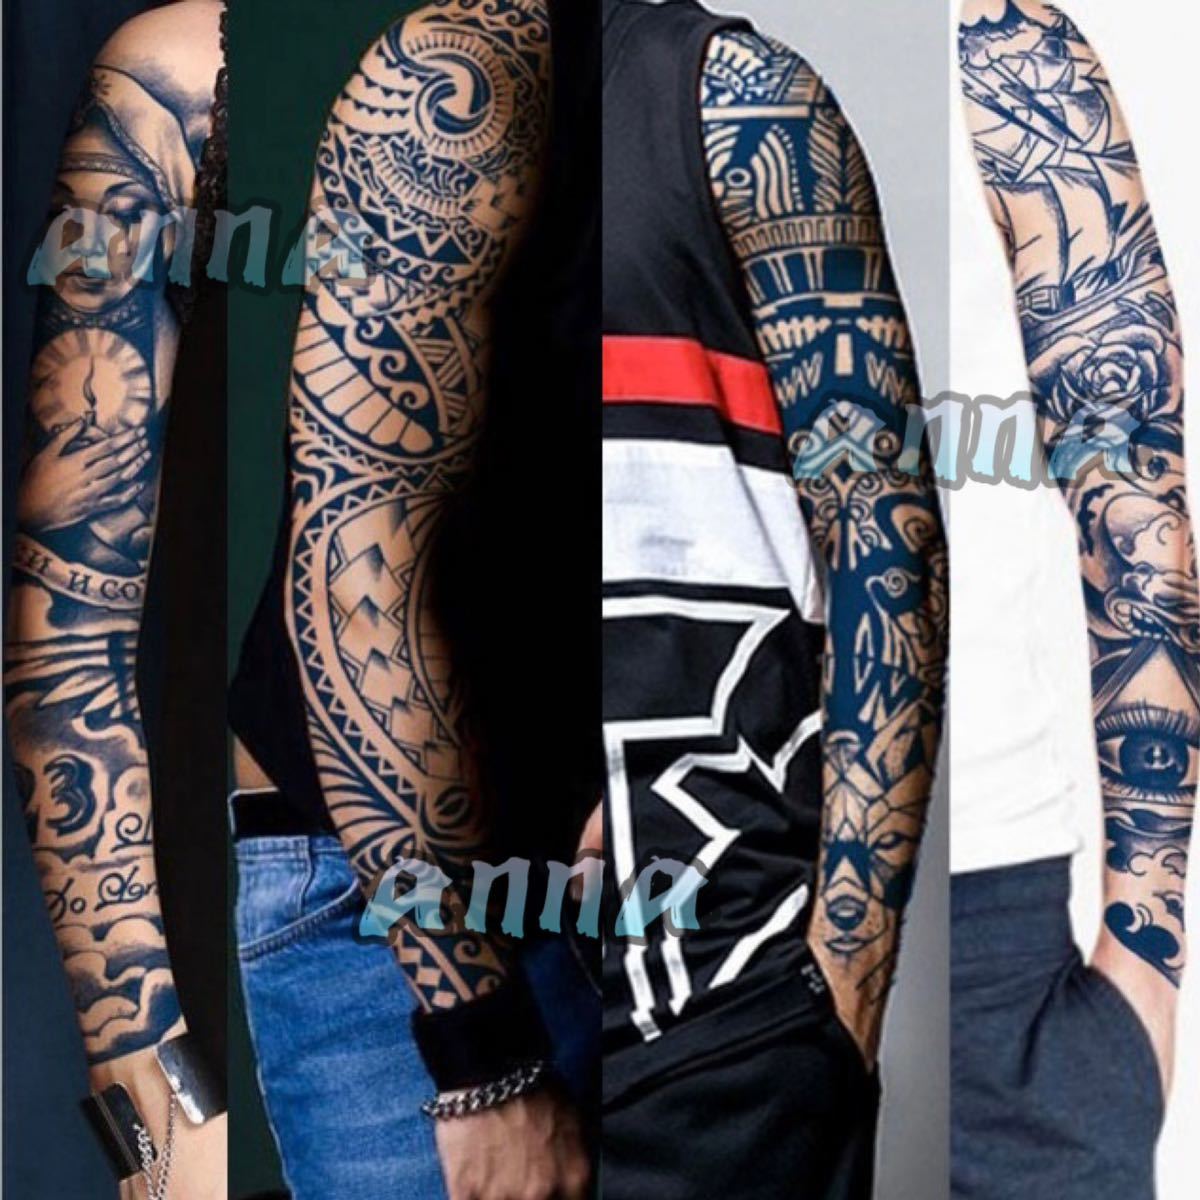 2 week . disappears 24 arm pair large scale henna ta toe Jug a tattoo seal tattoo seal tinto tattoo seal body art seal 